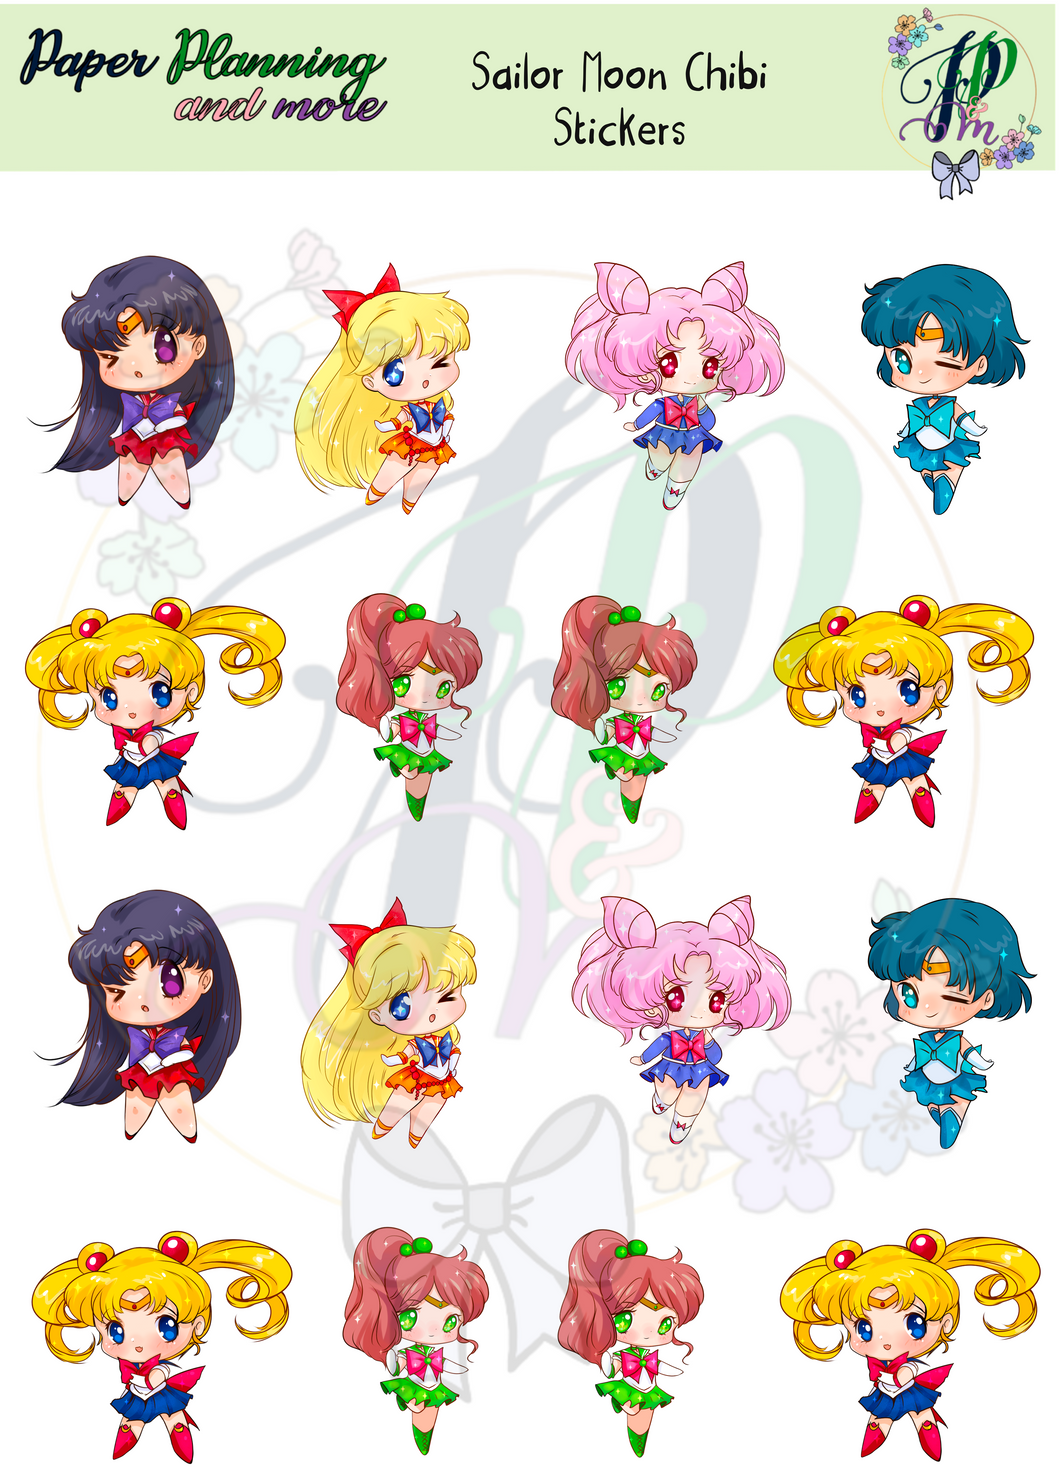 Sailor Moon Chibi Sticker Sheet